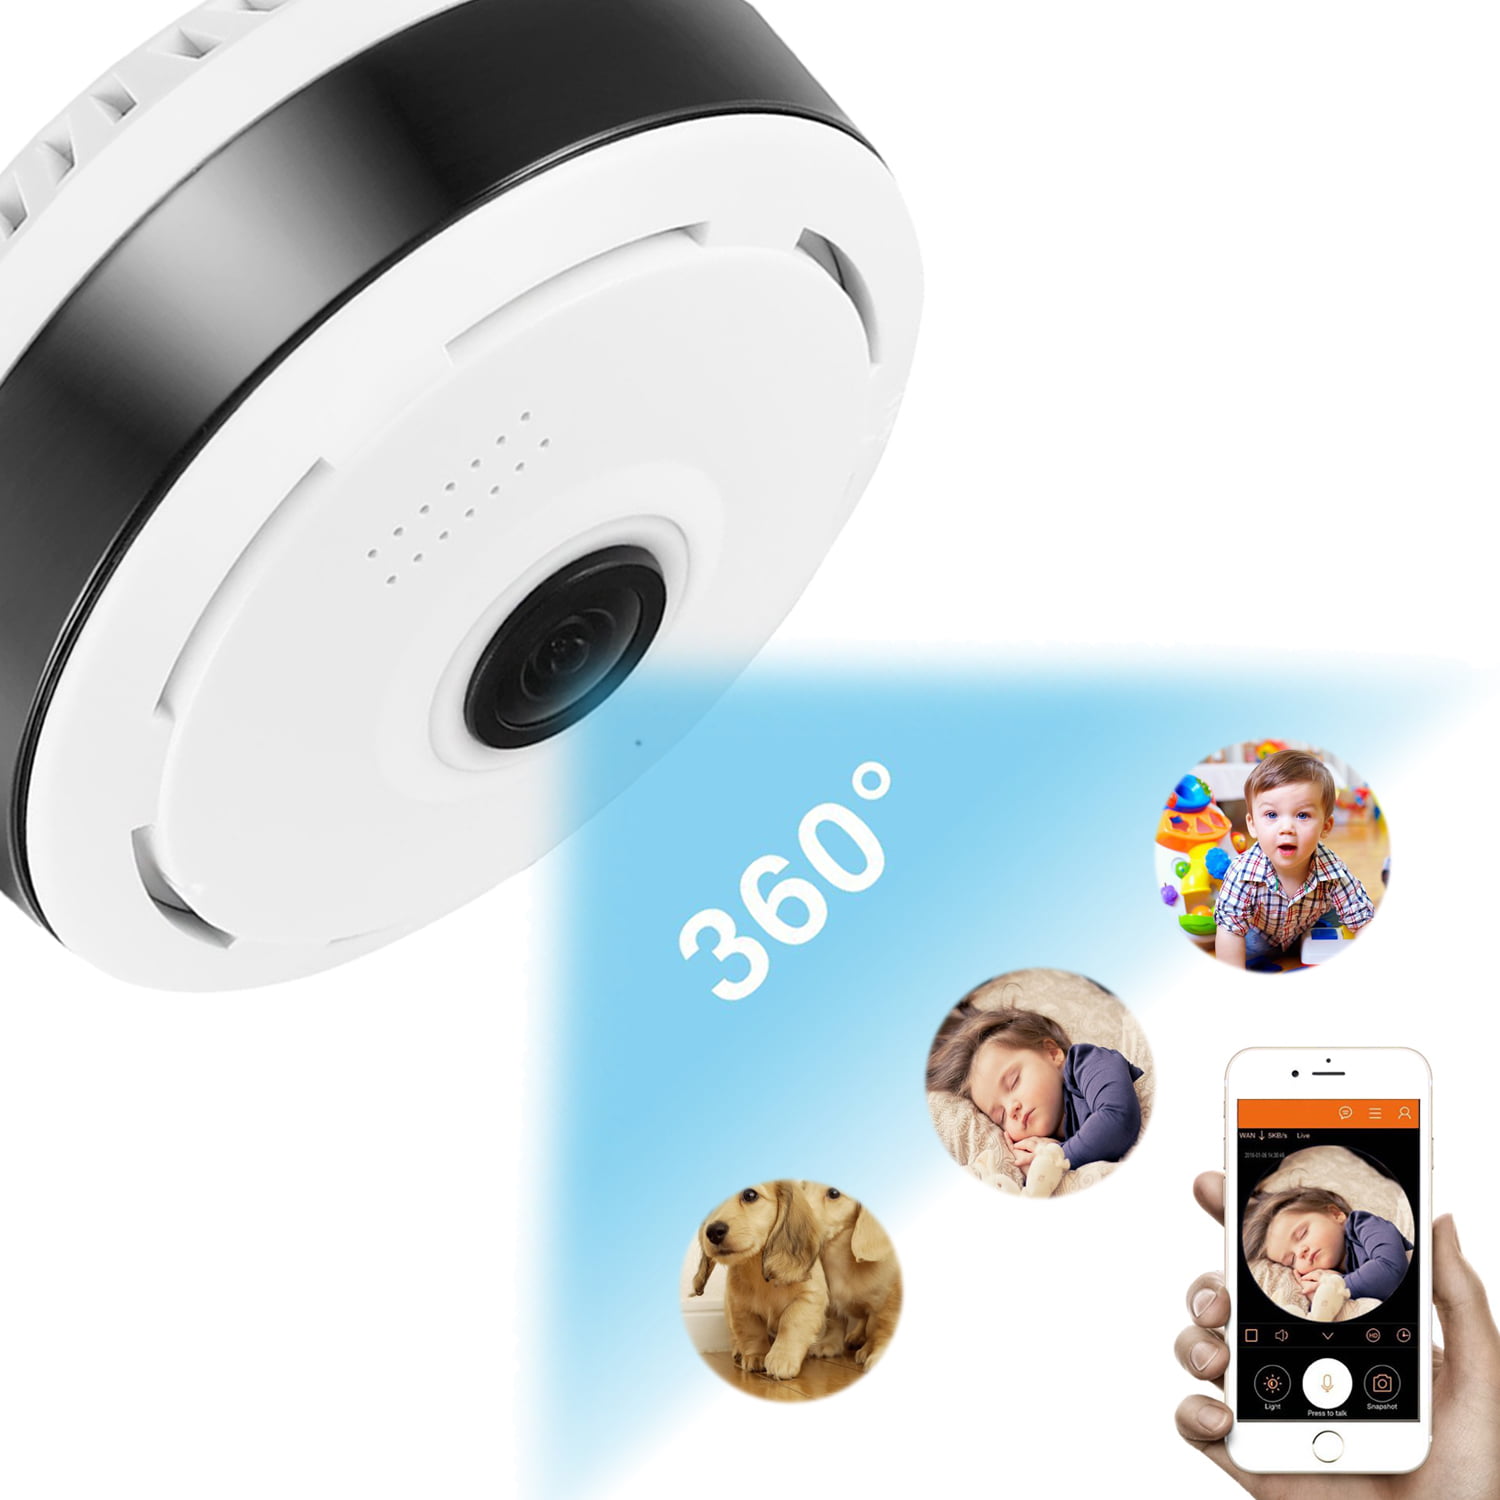 360 security camera system